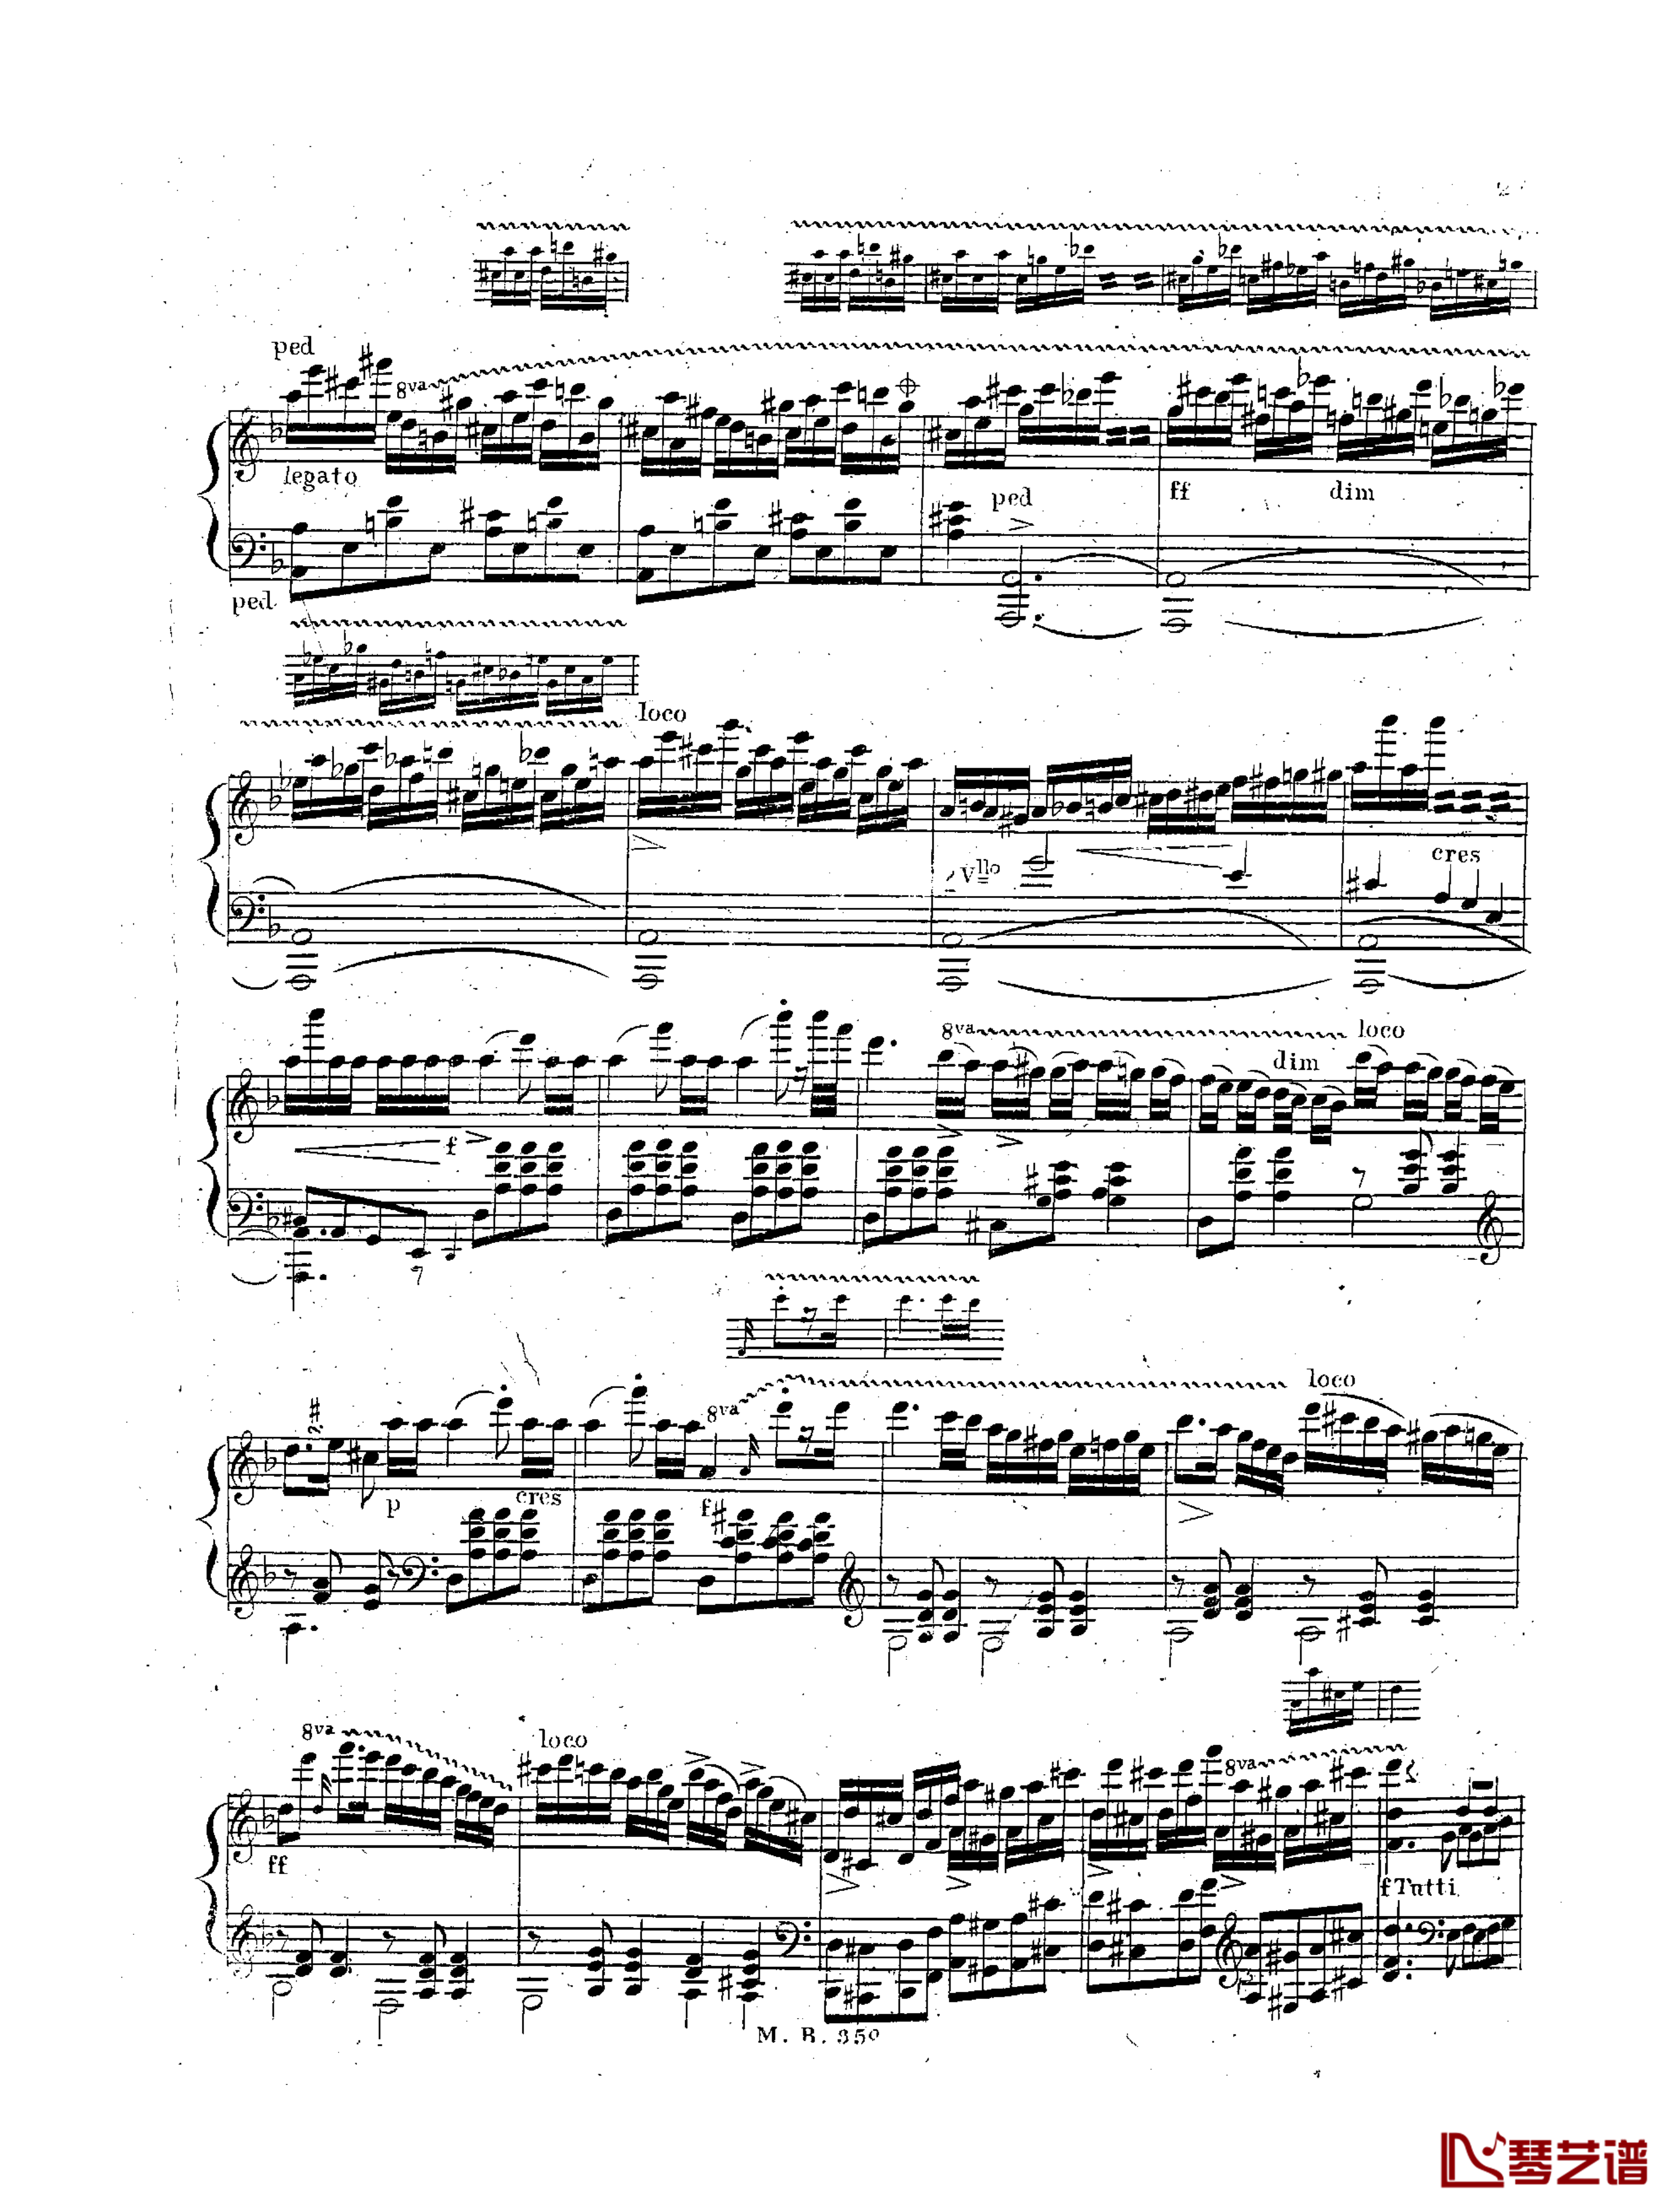  d小调第一钢琴协奏曲 Op.61  第三乐章钢琴谱-卡尔克布雷纳3